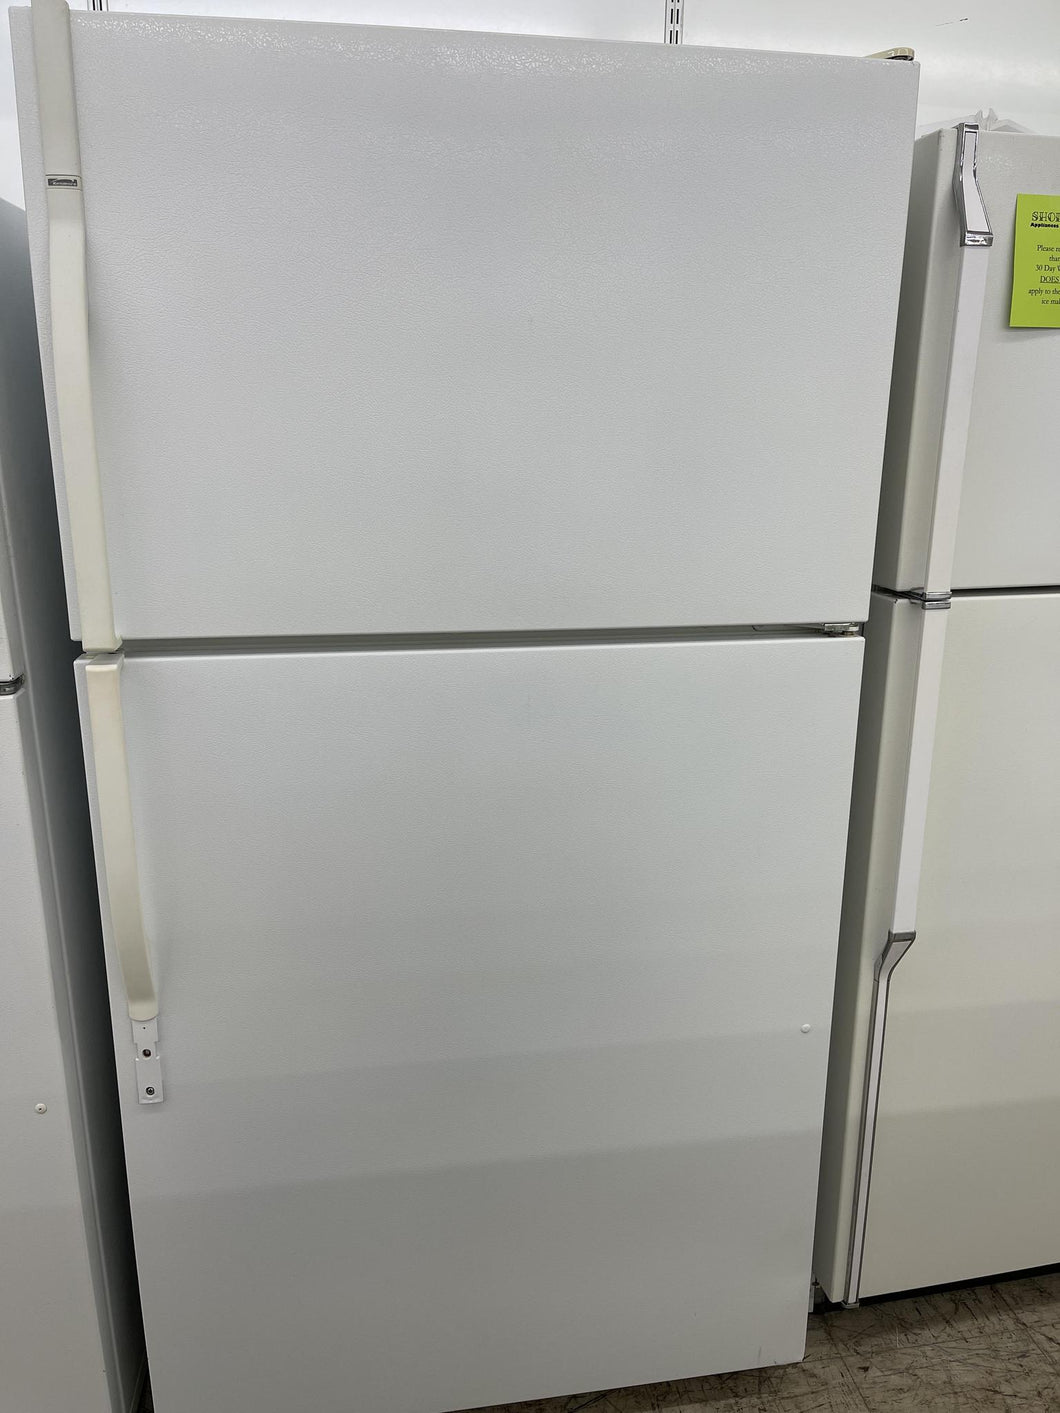 Kenmore Refrigerator - 2611